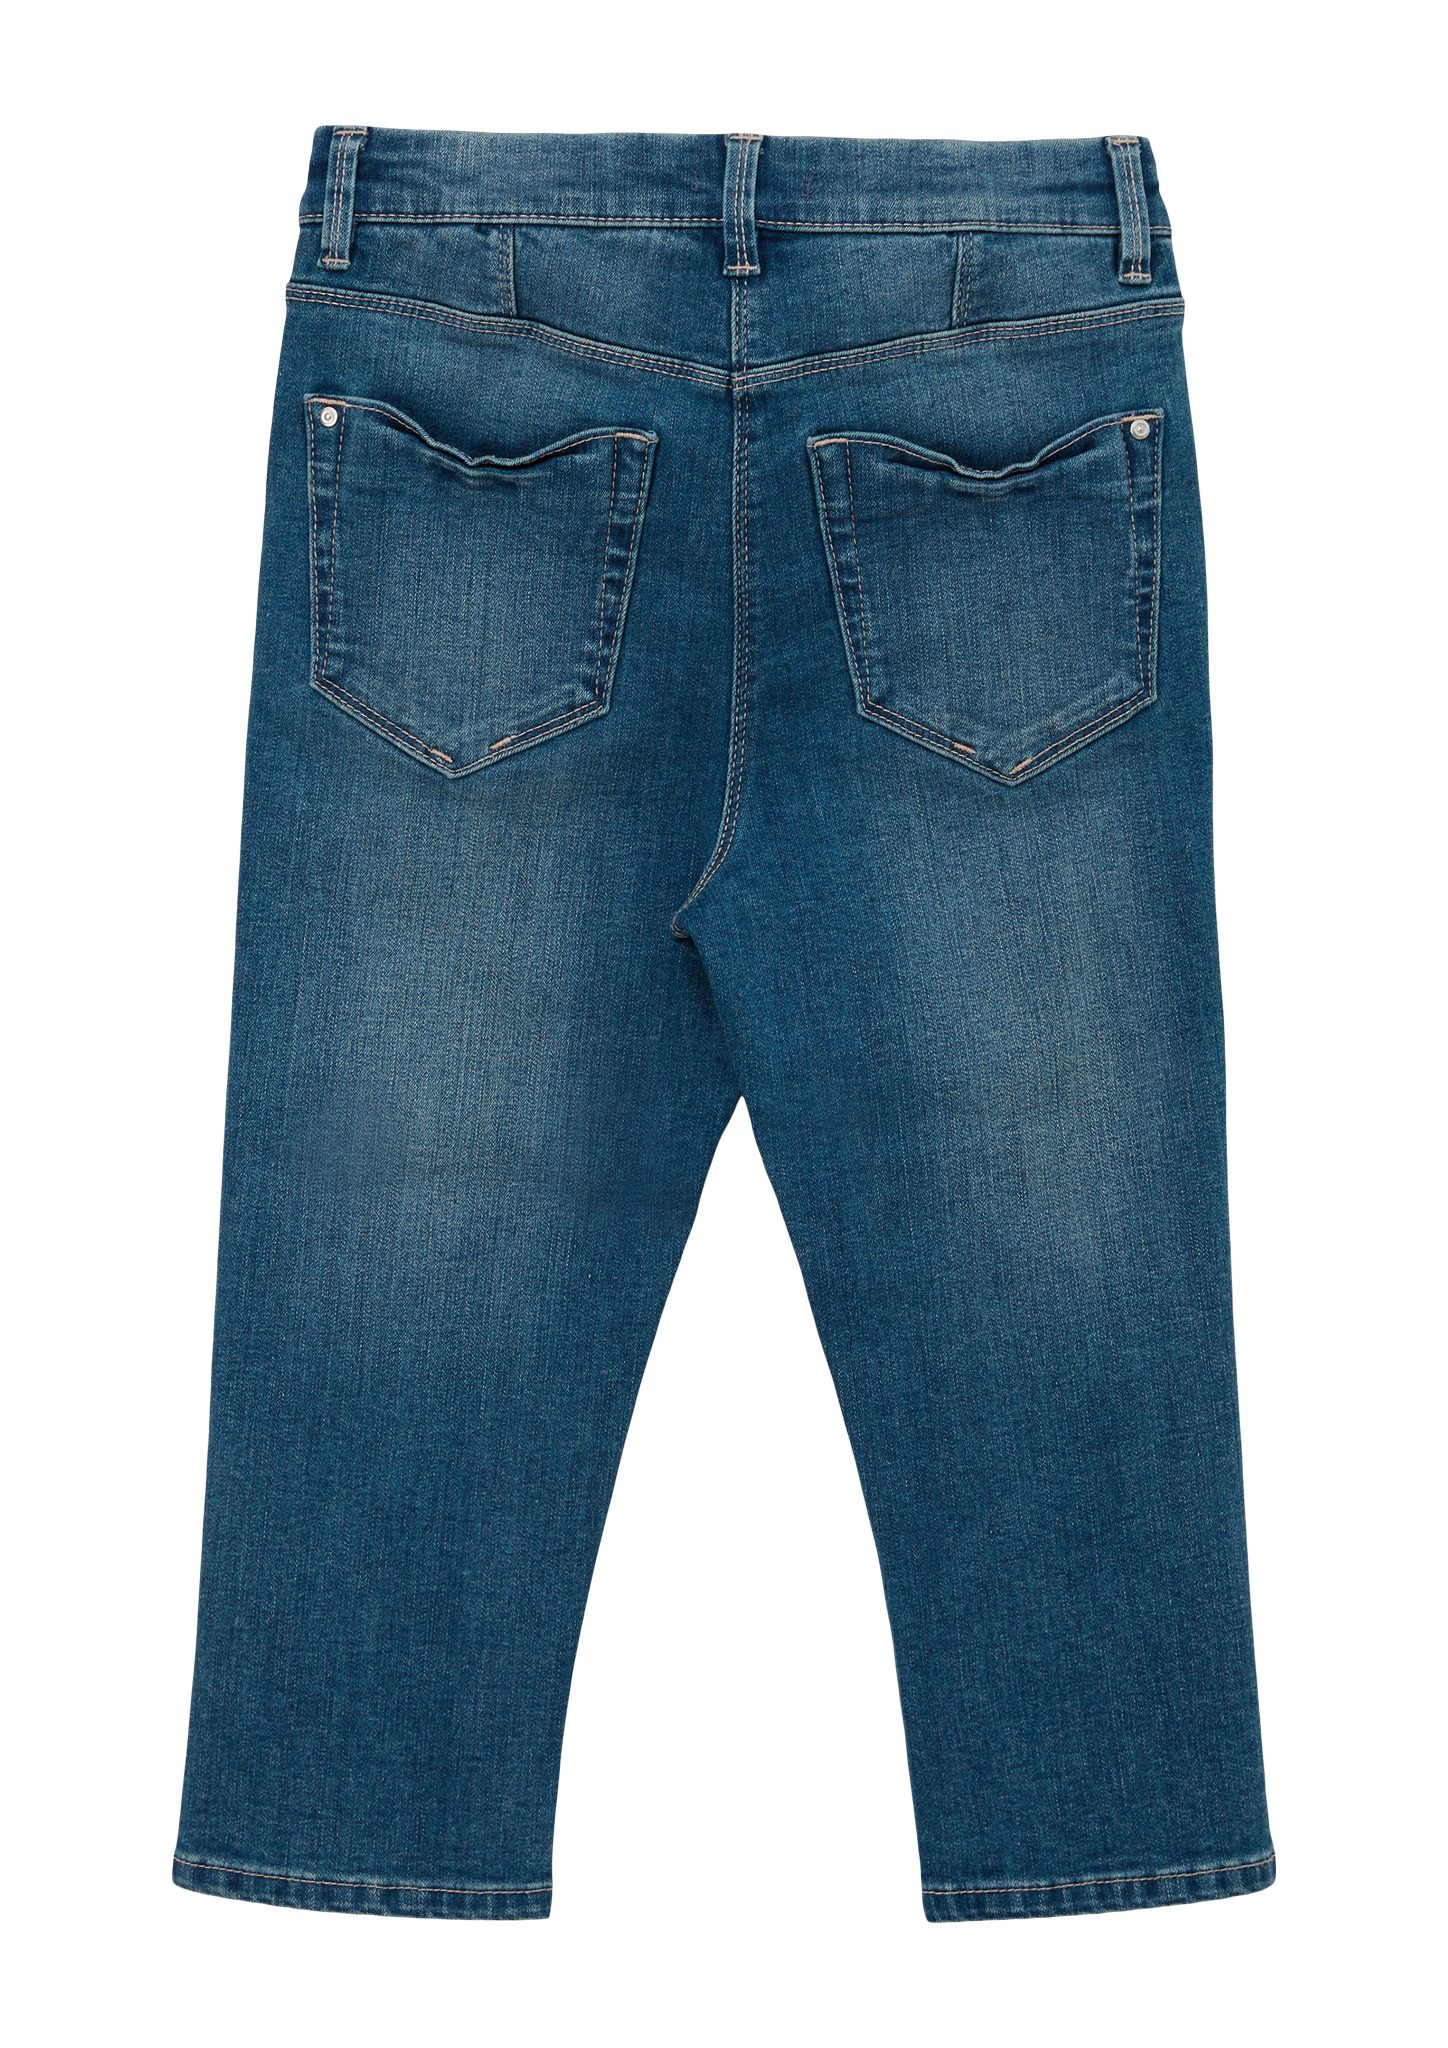 Waschung Suri / Fit Skinny / 3/4-Hose s.Oliver / Rise Leg Capri-Jeans High Skinny Skinny